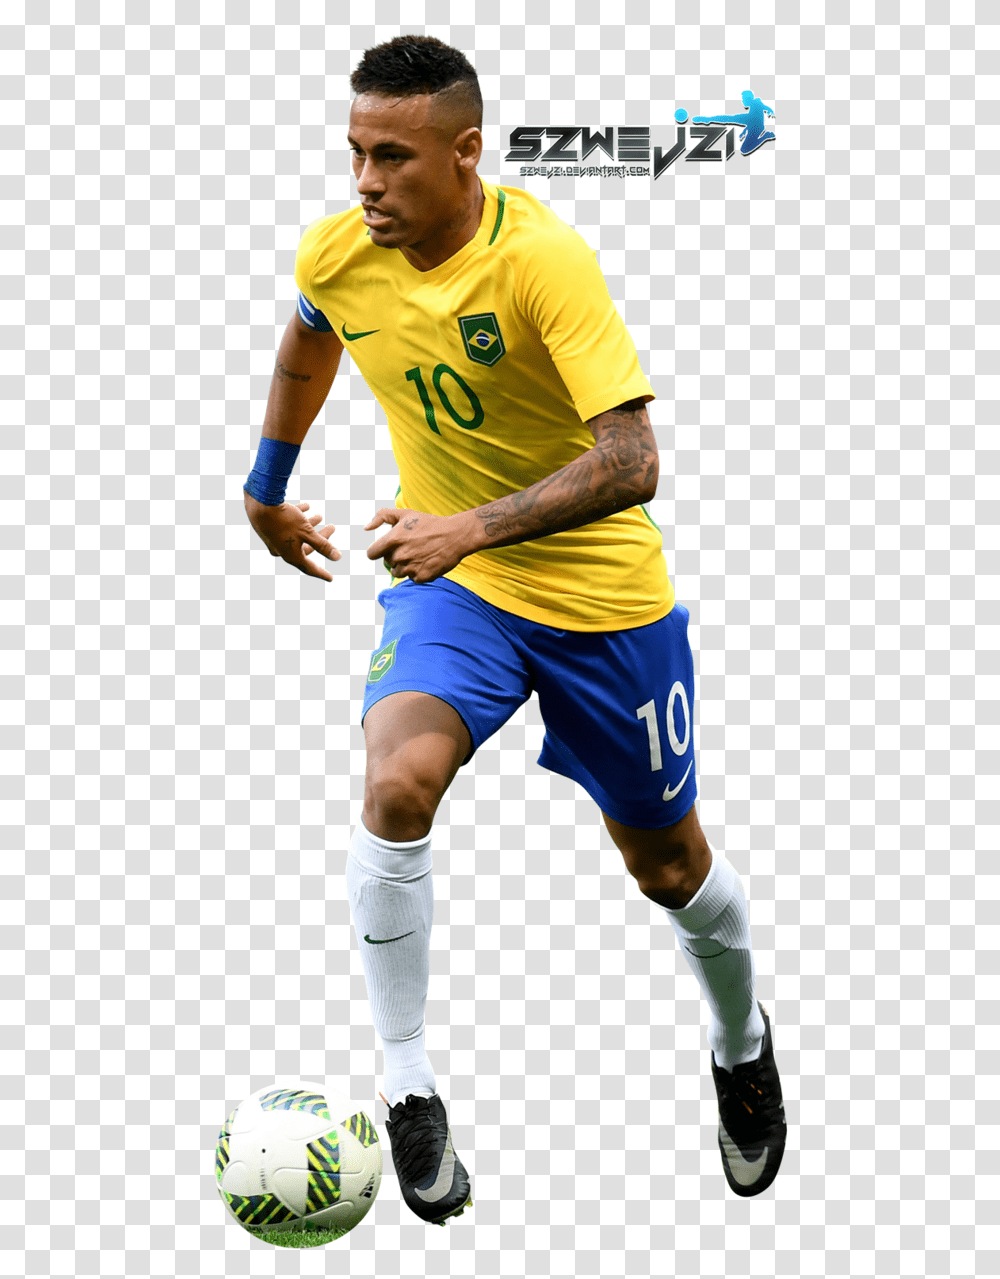 Neymar 10 Brazil Neymar Render, Sphere, Person, Soccer Ball, Football Transparent Png